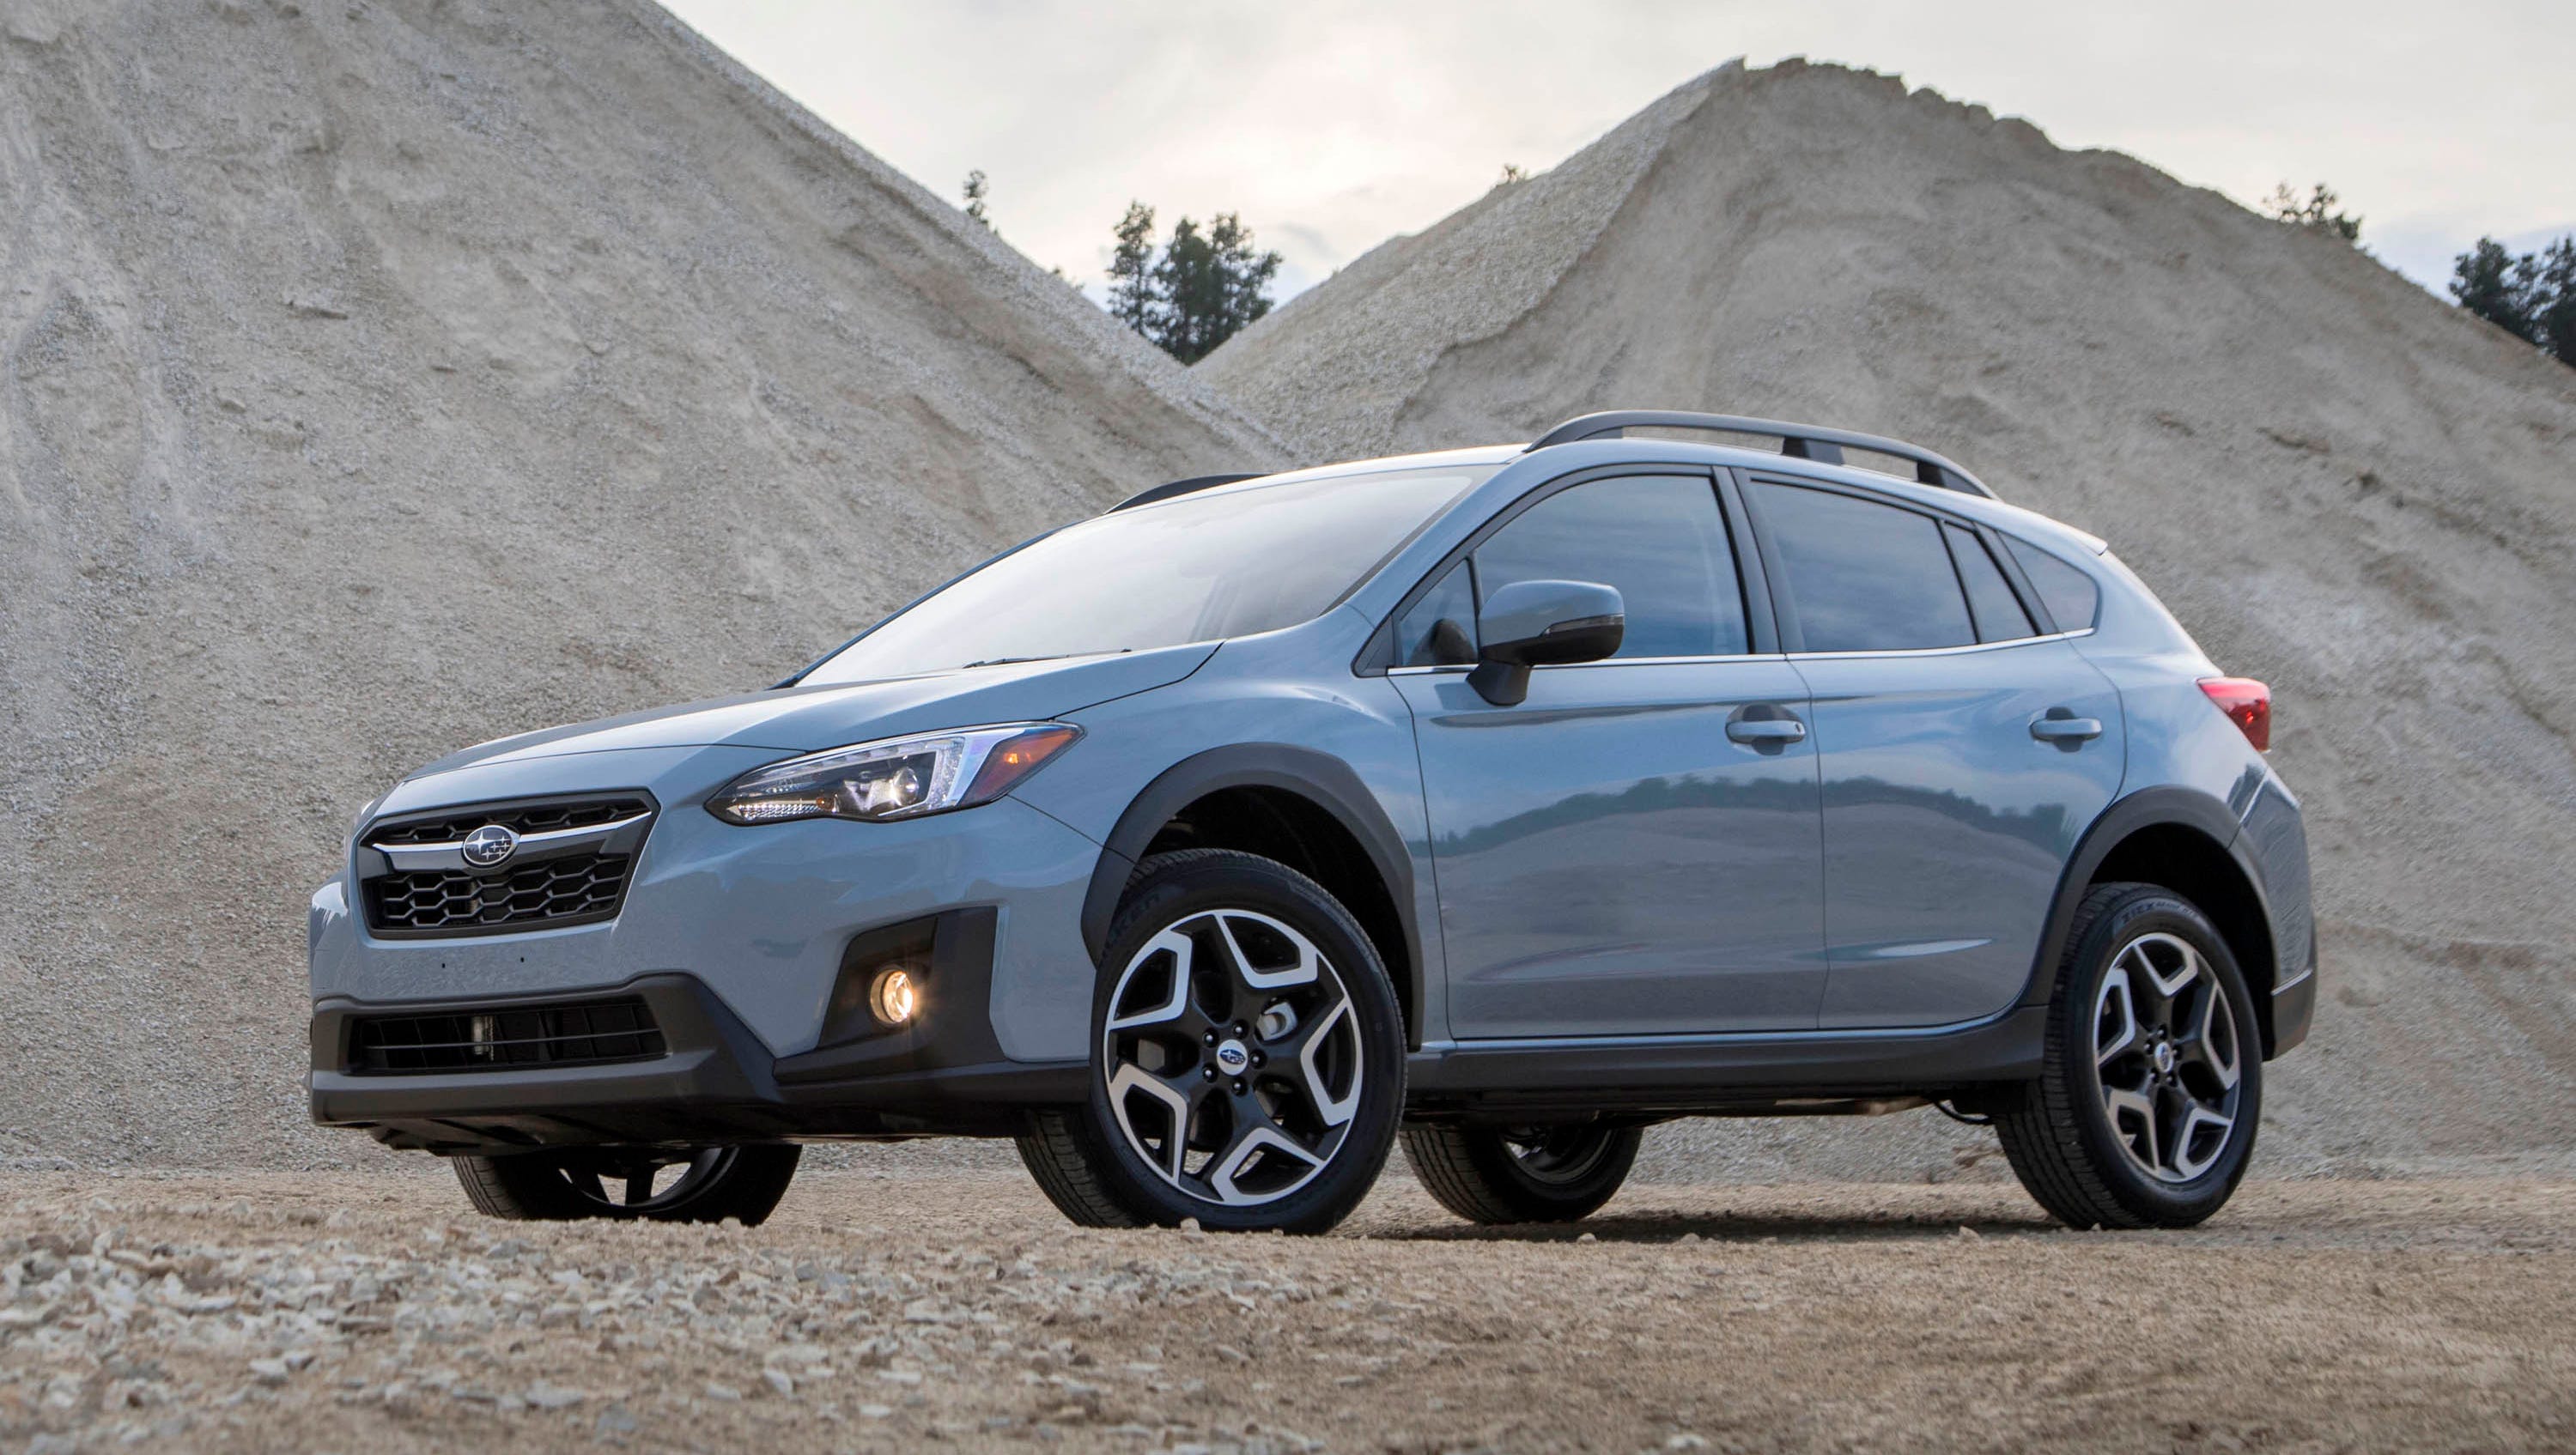 Subaru recalls nearly 400K vehicles to fix stalling problems